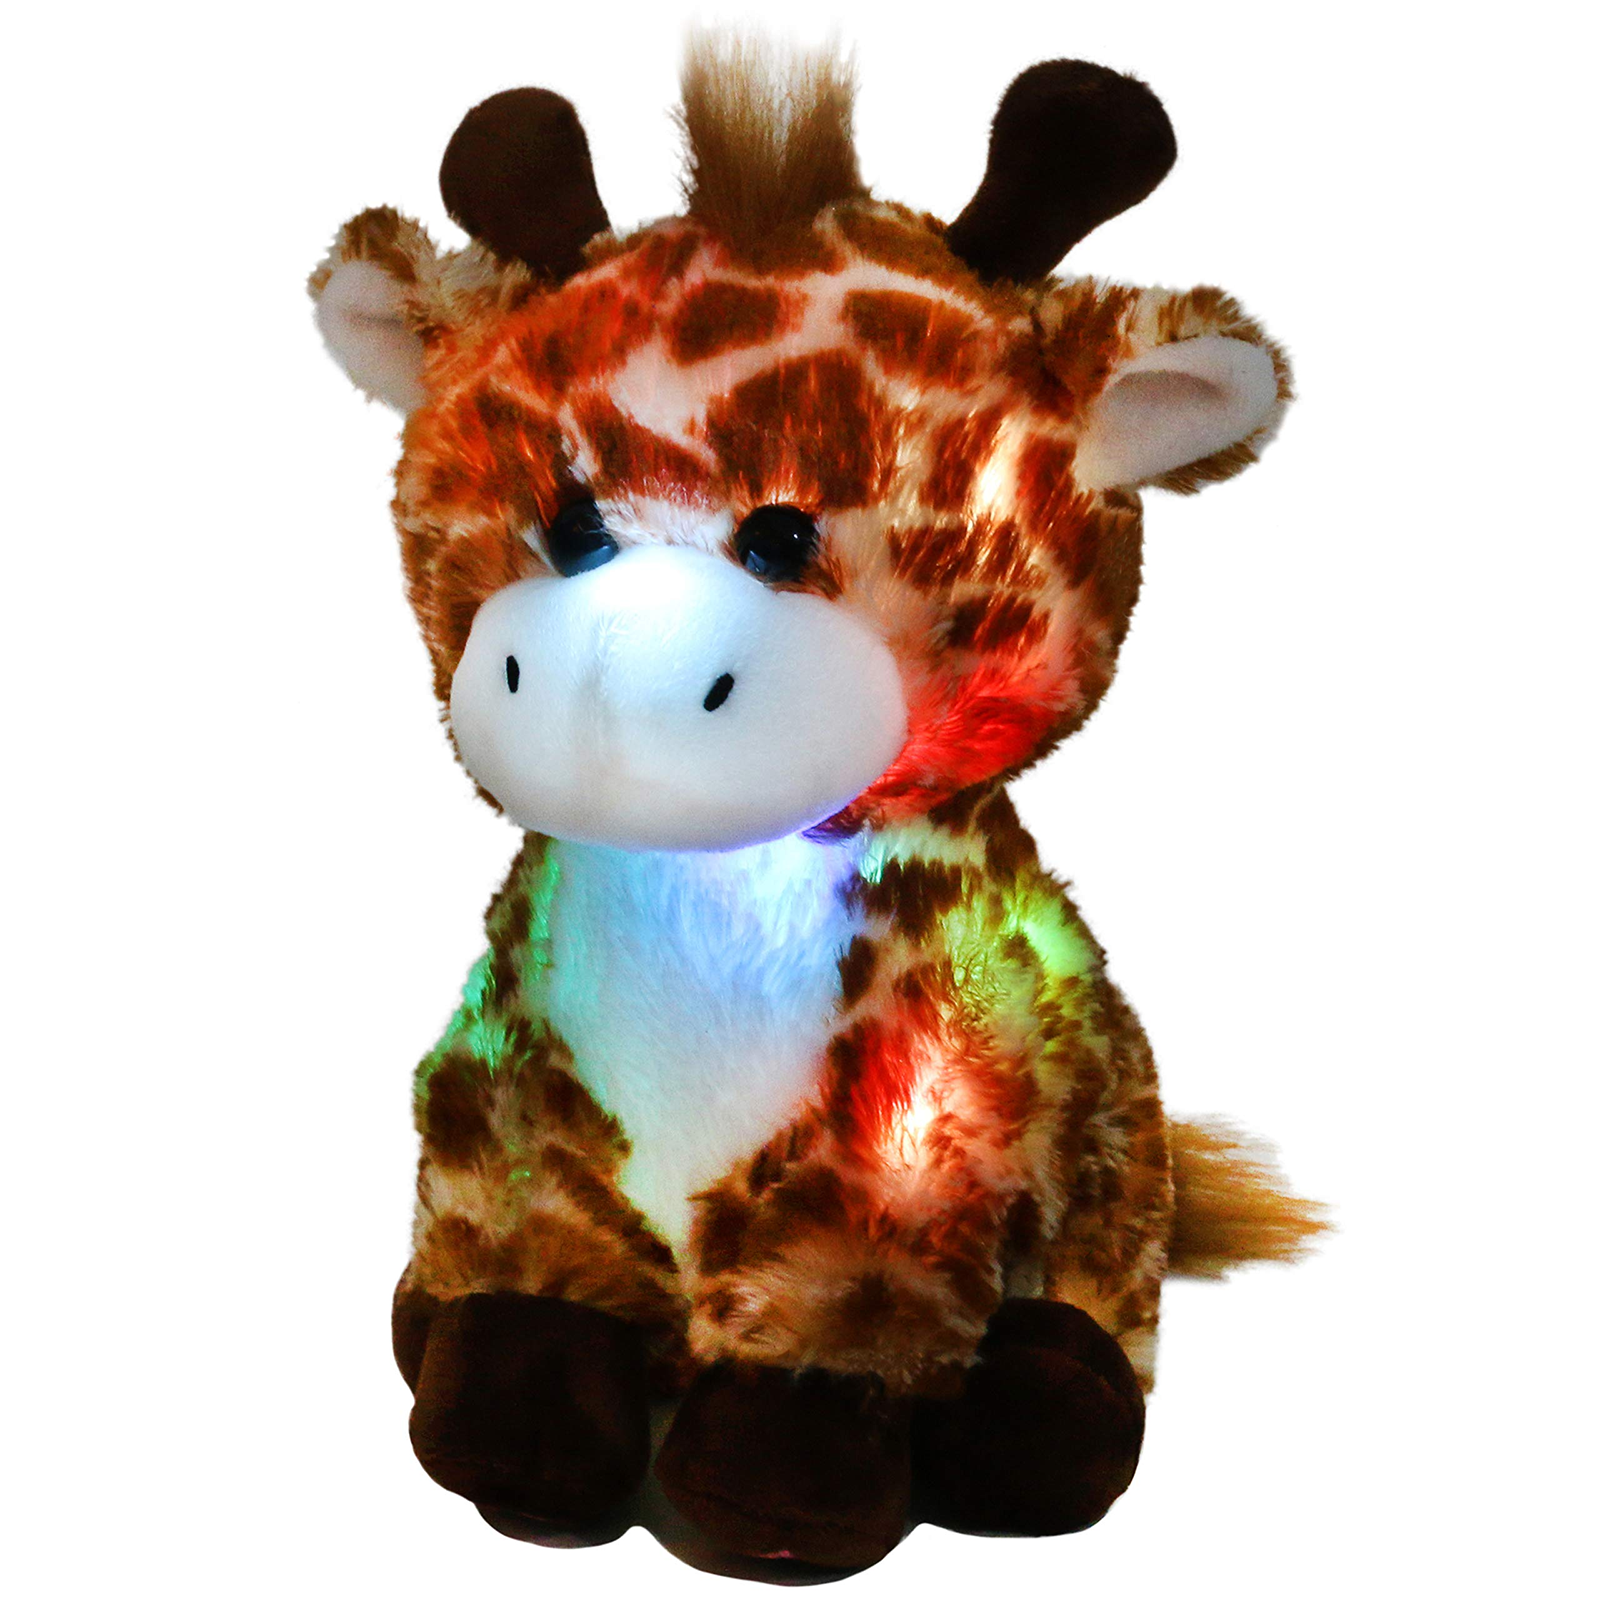 Cute Animals Plush Toy Baby Kids Favor Plush Play Toy Soft Giraffe Animal Dolls Birthday Wedding Party Christmas Gift